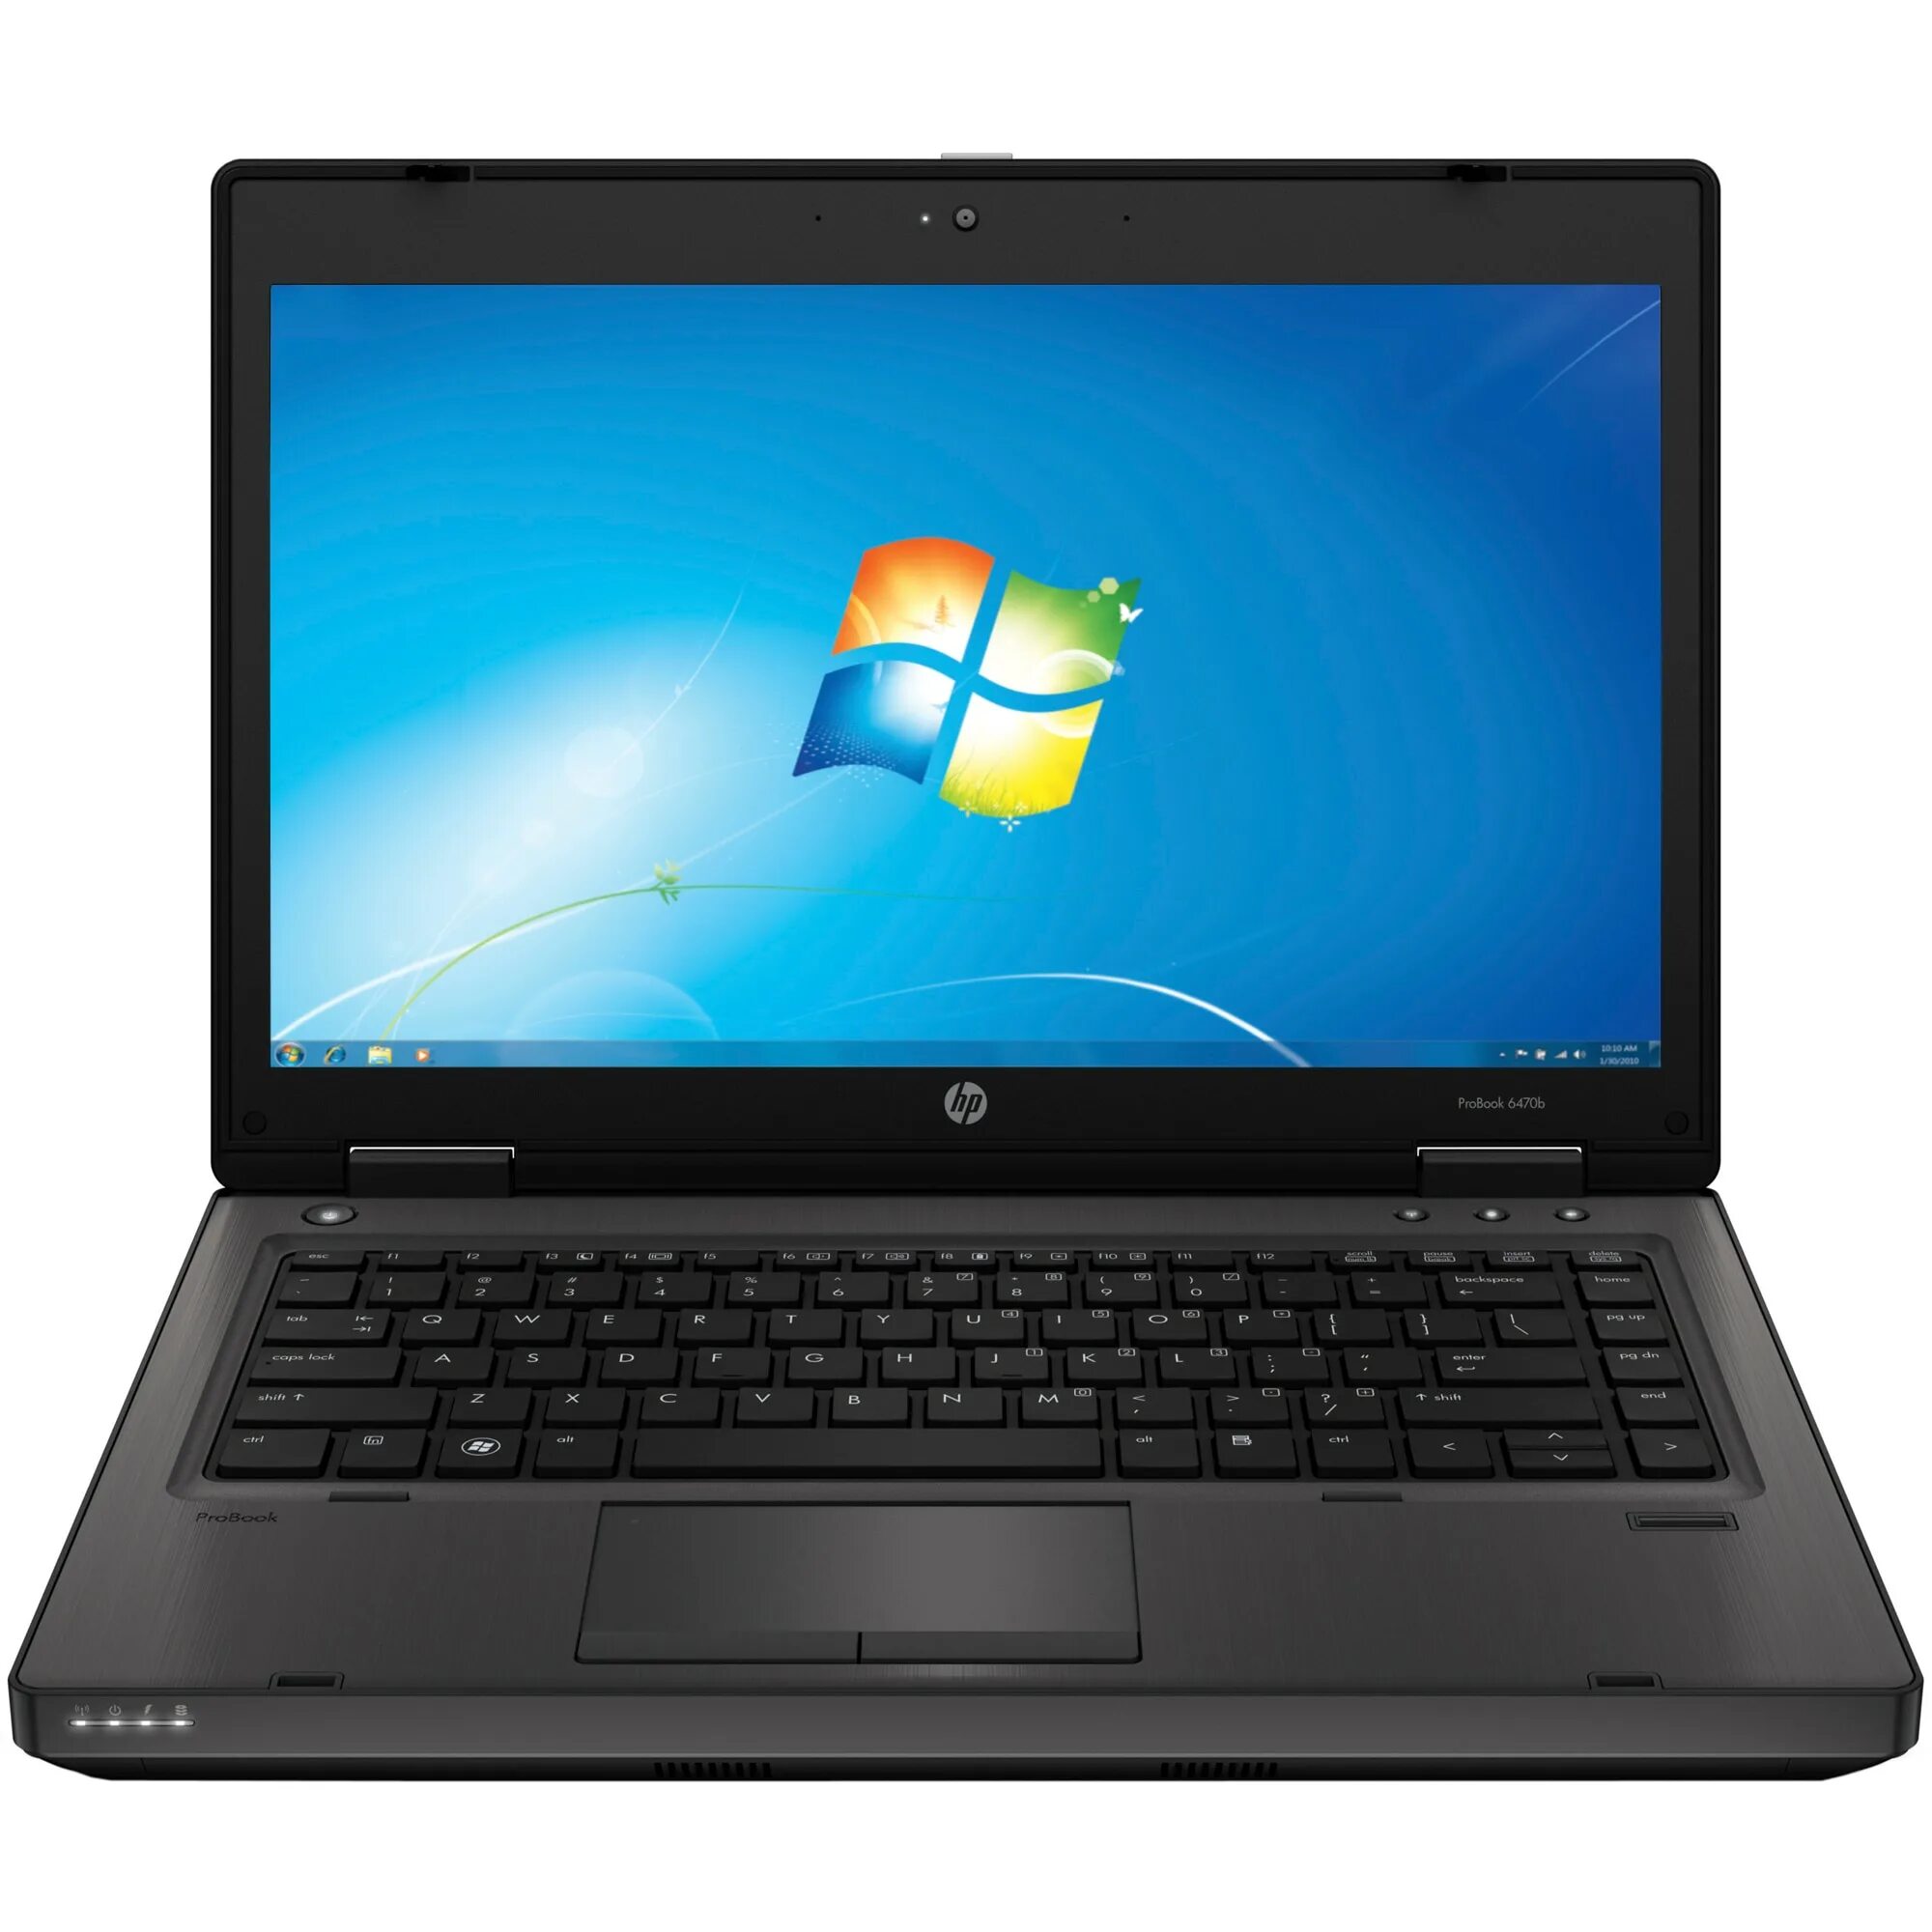 Ноутбуки какой фирмы. Ноутбук Acer emachines. Emachines e525 Windows Vista. Emachines e525 Windows 7. Ноутбук е Машинс.